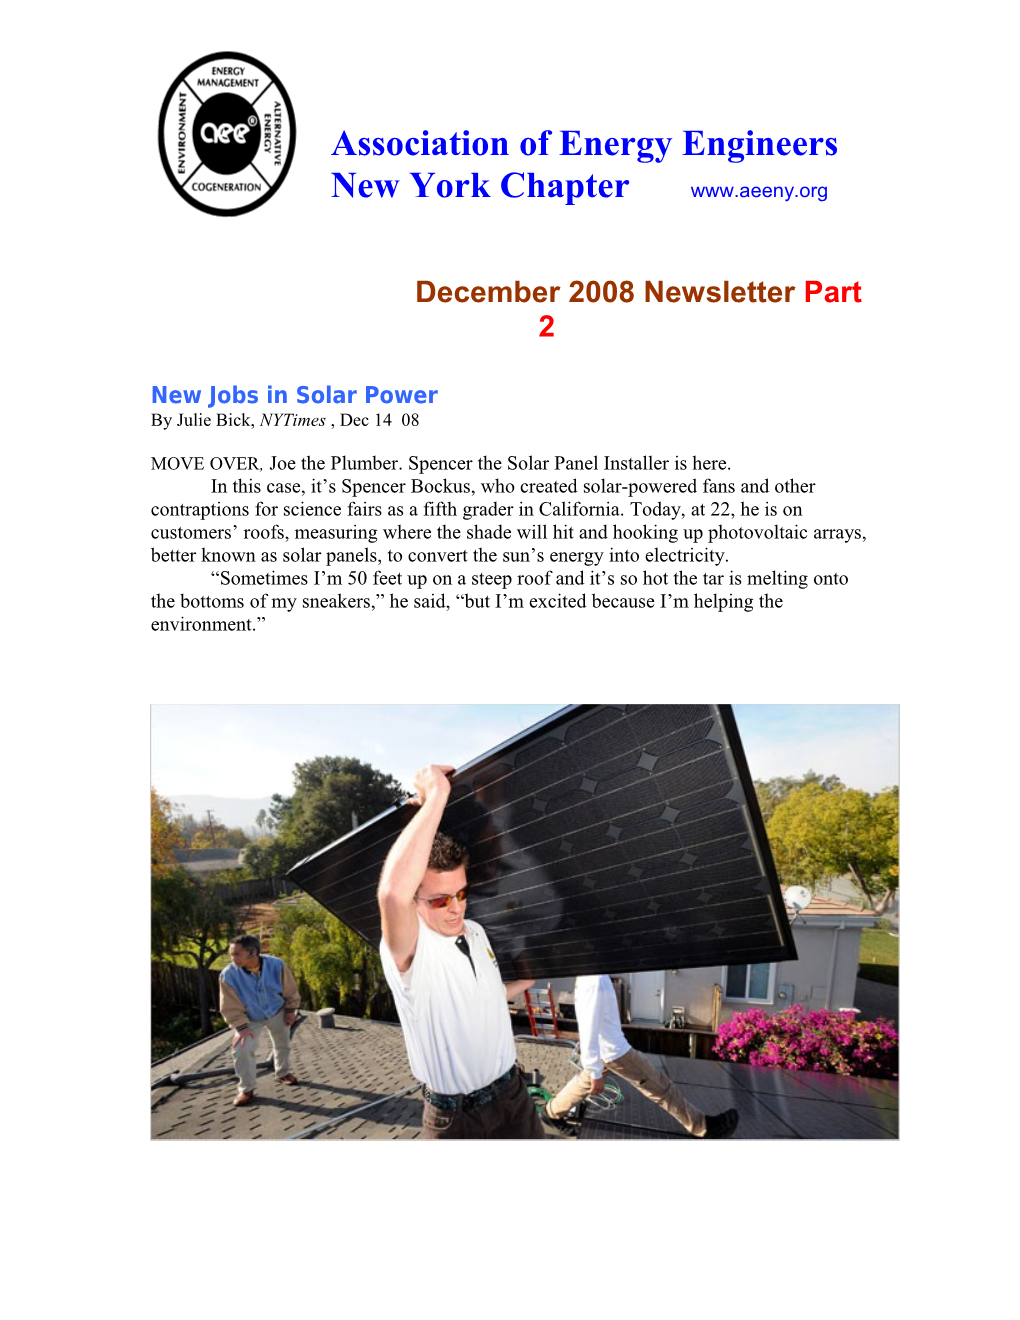 New Jobs in Solar Power